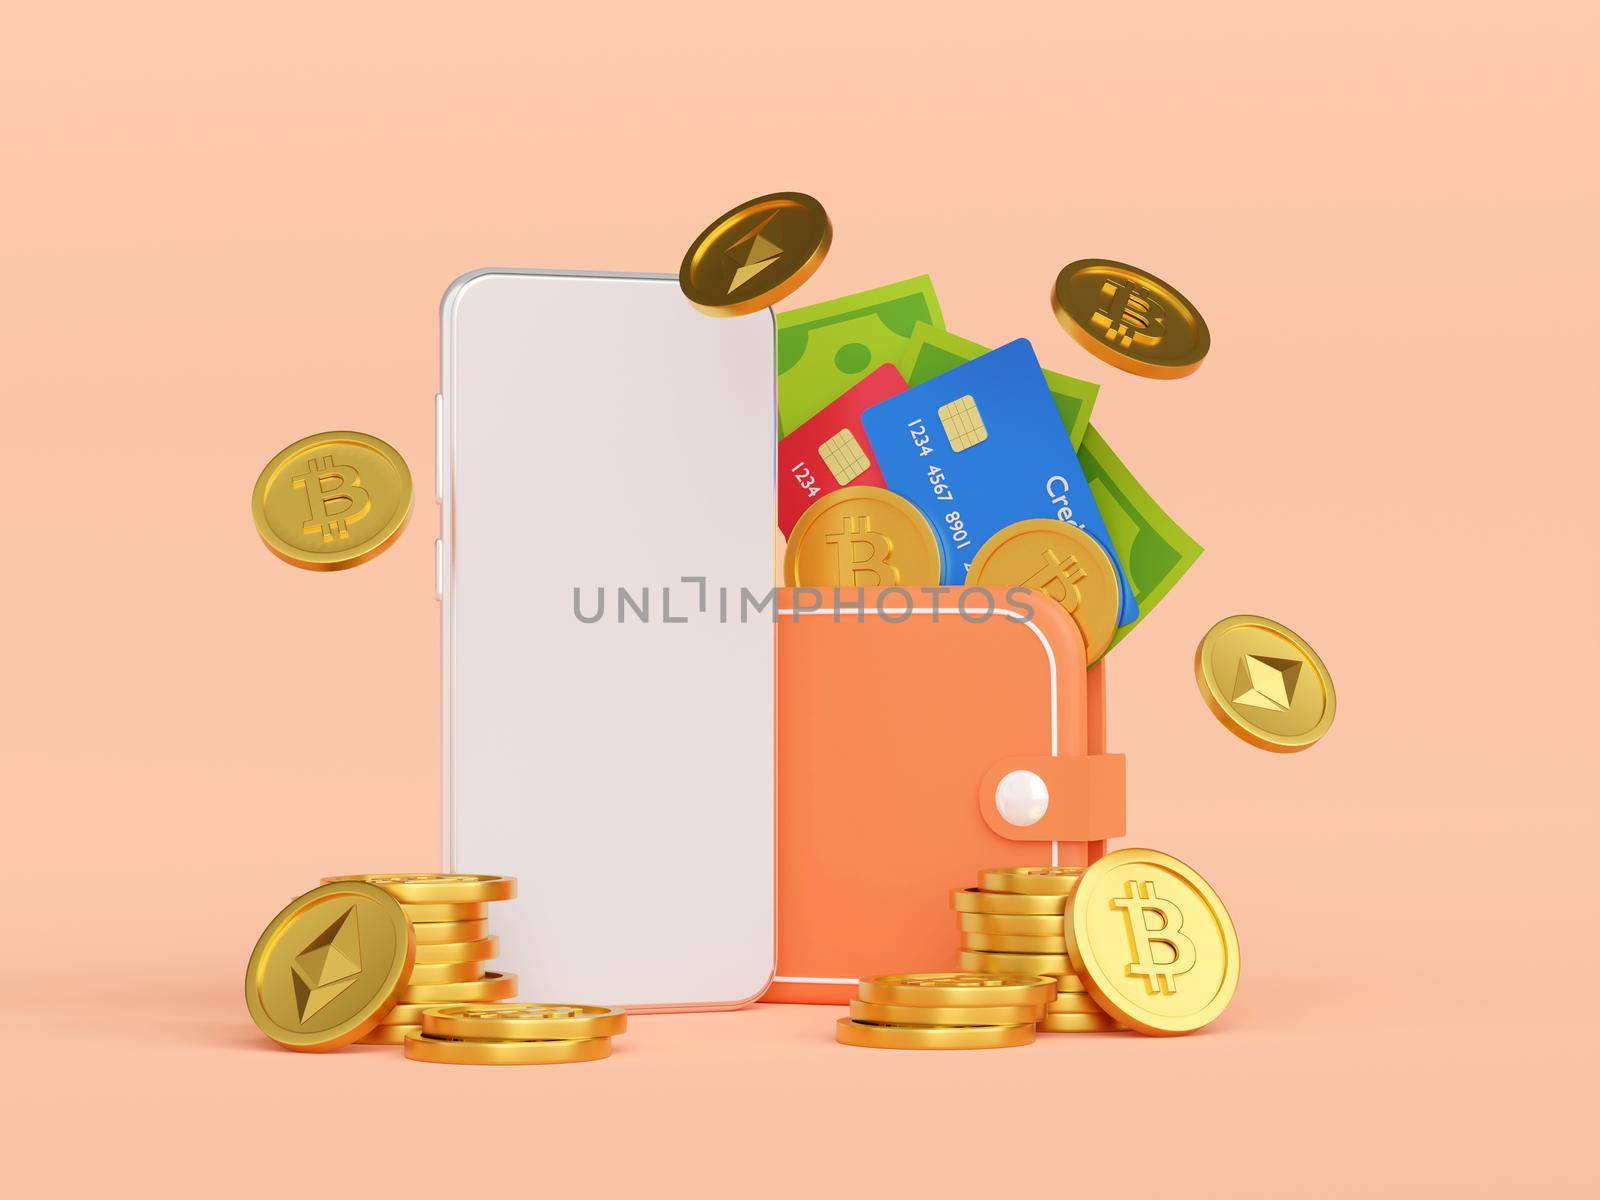 Cryptocurrency wallet application on smartphone, 3d illustration by nutzchotwarut